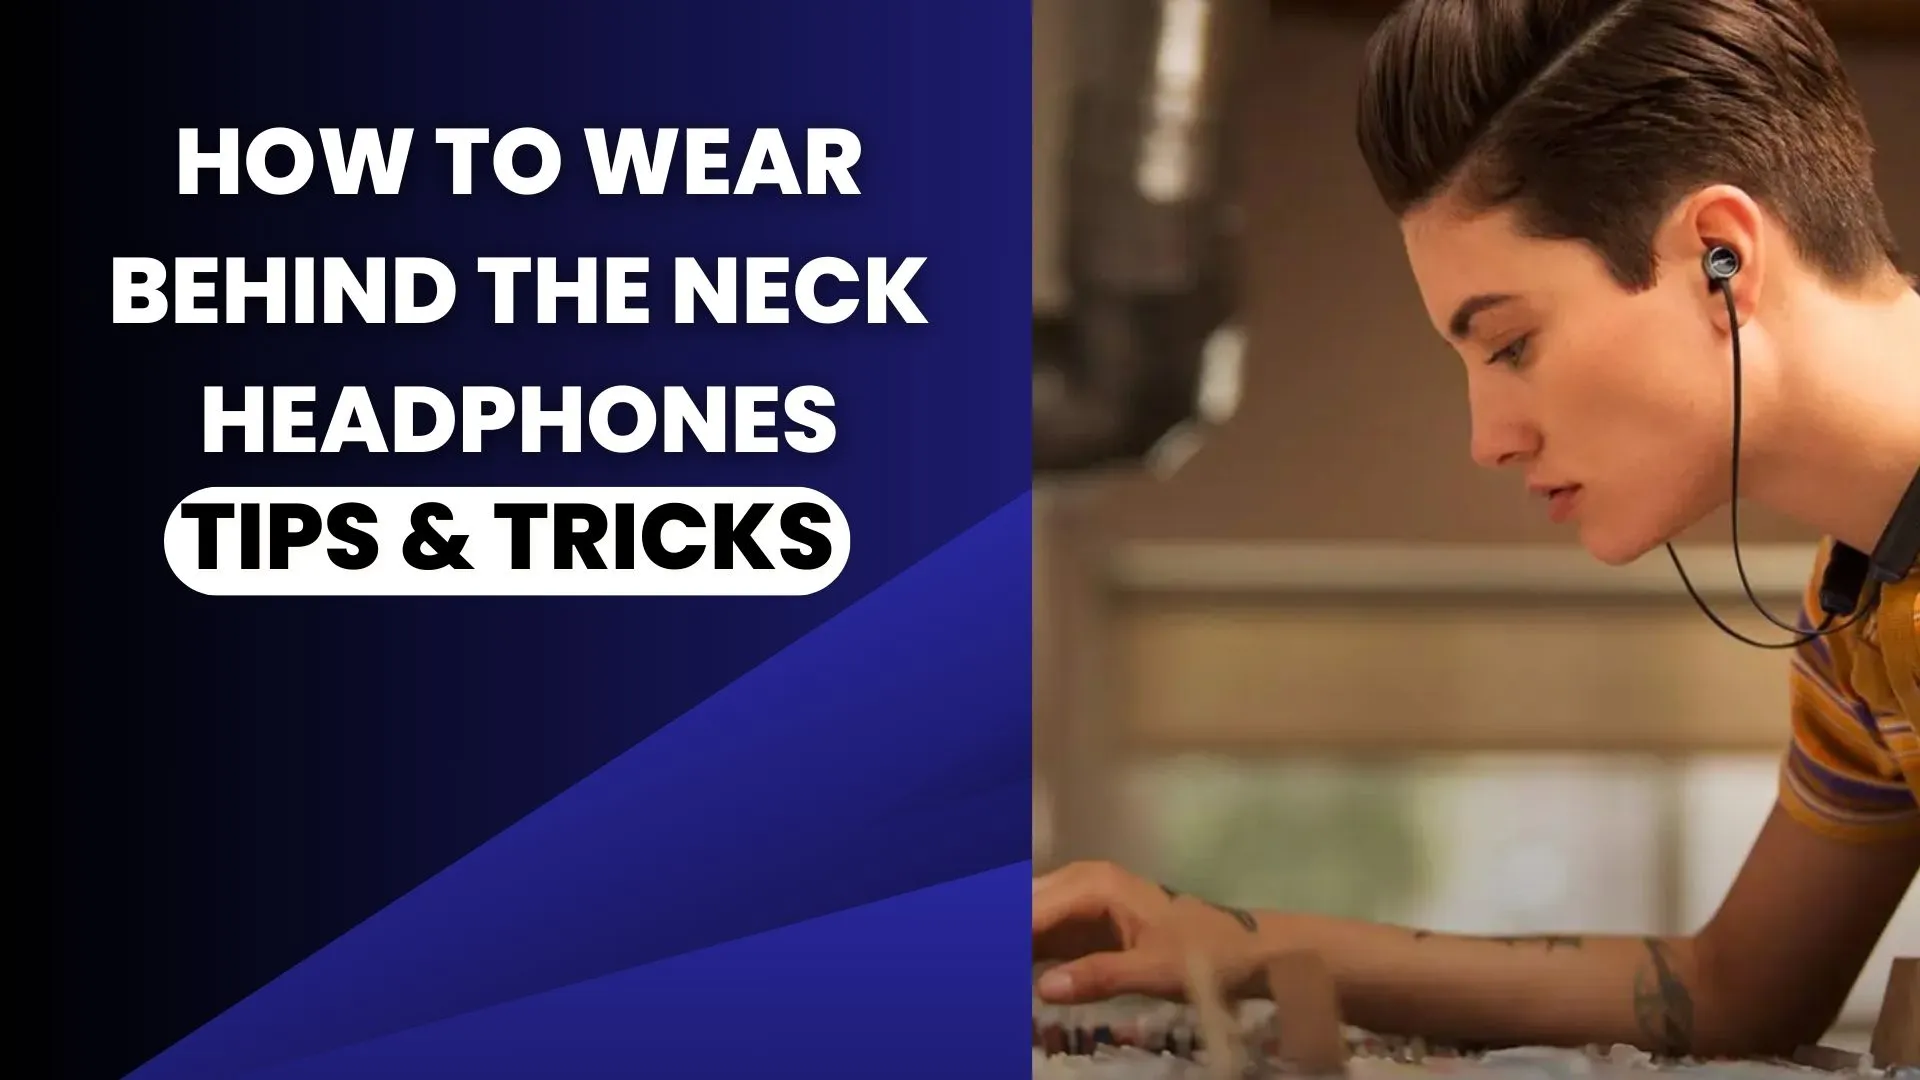 How to Wear Behind the Neck Headphones